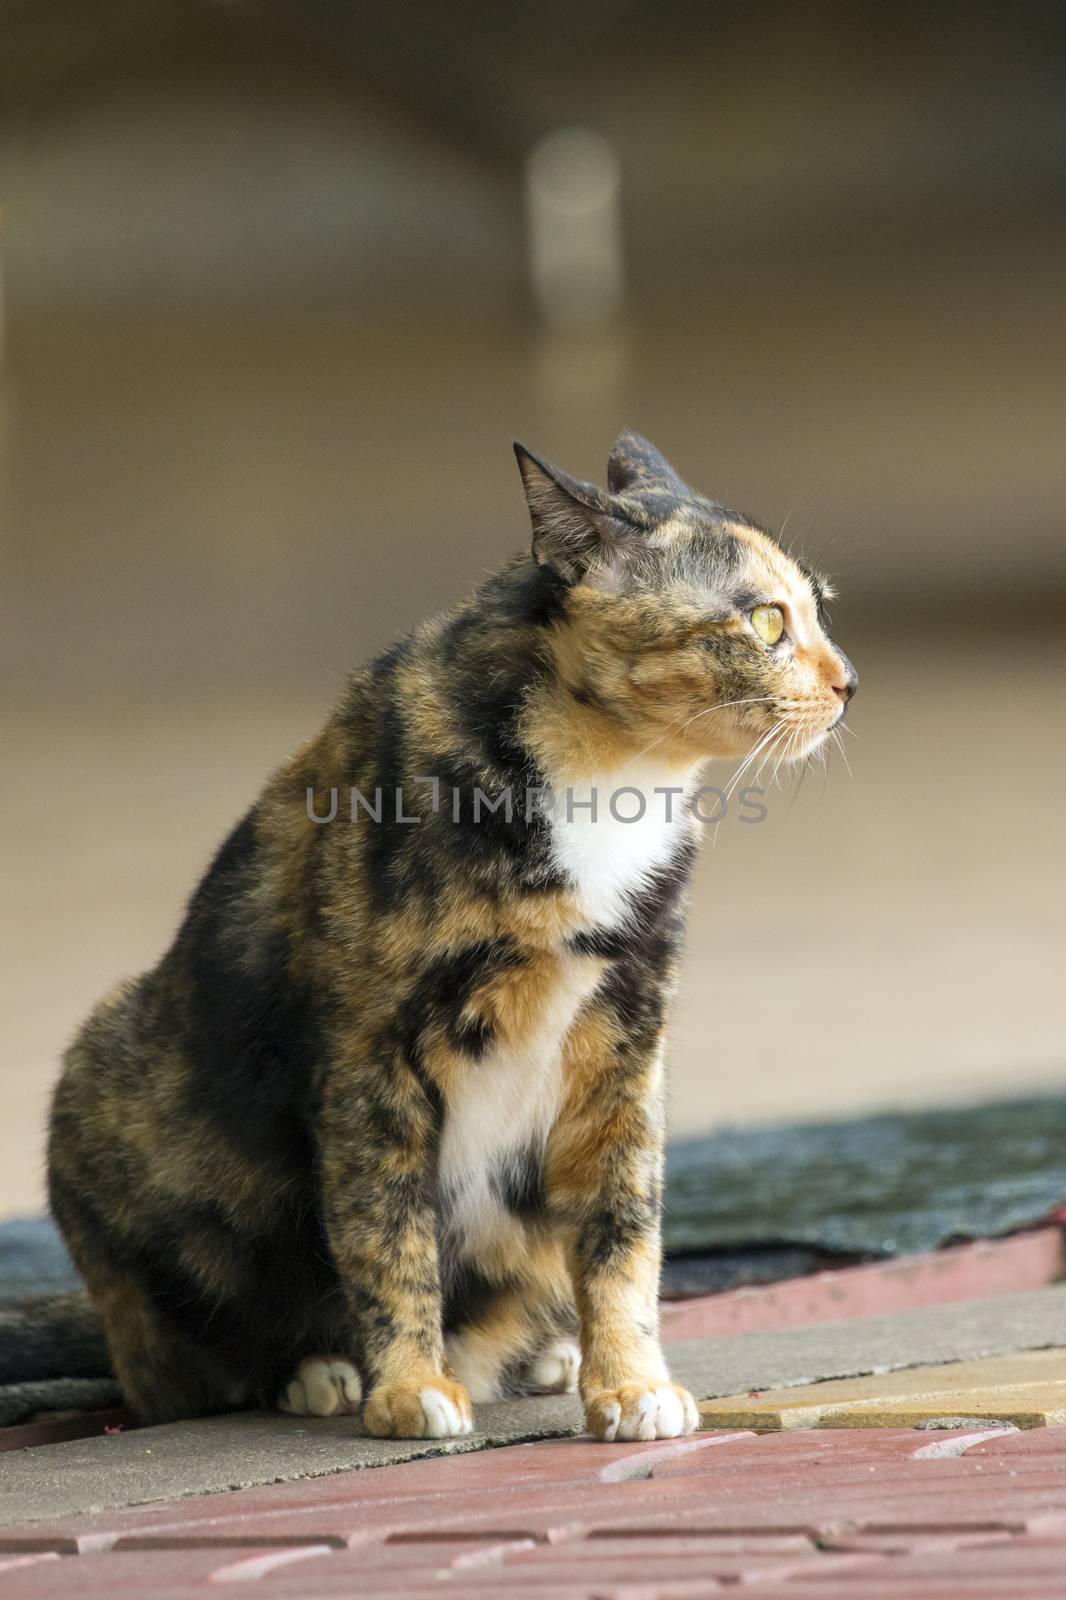 Image of a cat sat on concrete floor